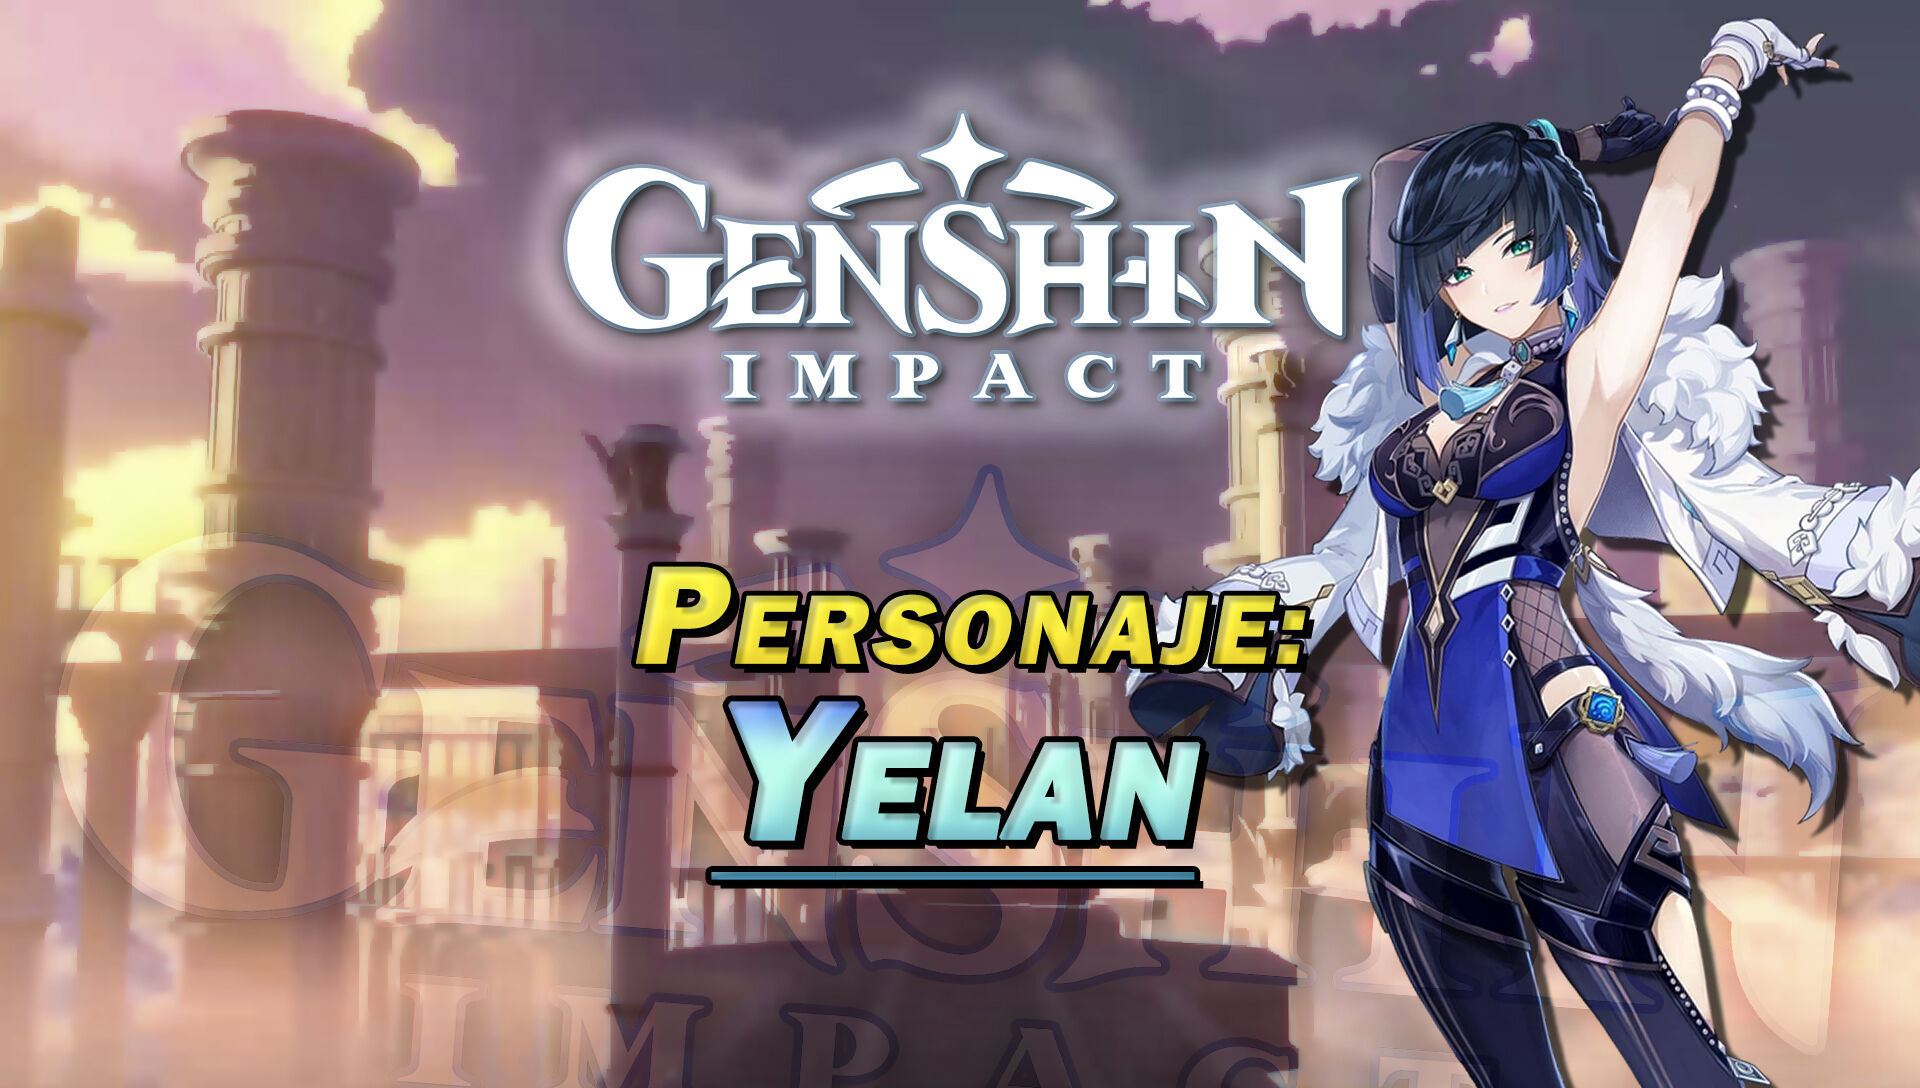 Genshin Impact: Yelan, habilidades, materiais e mais sobre a nova